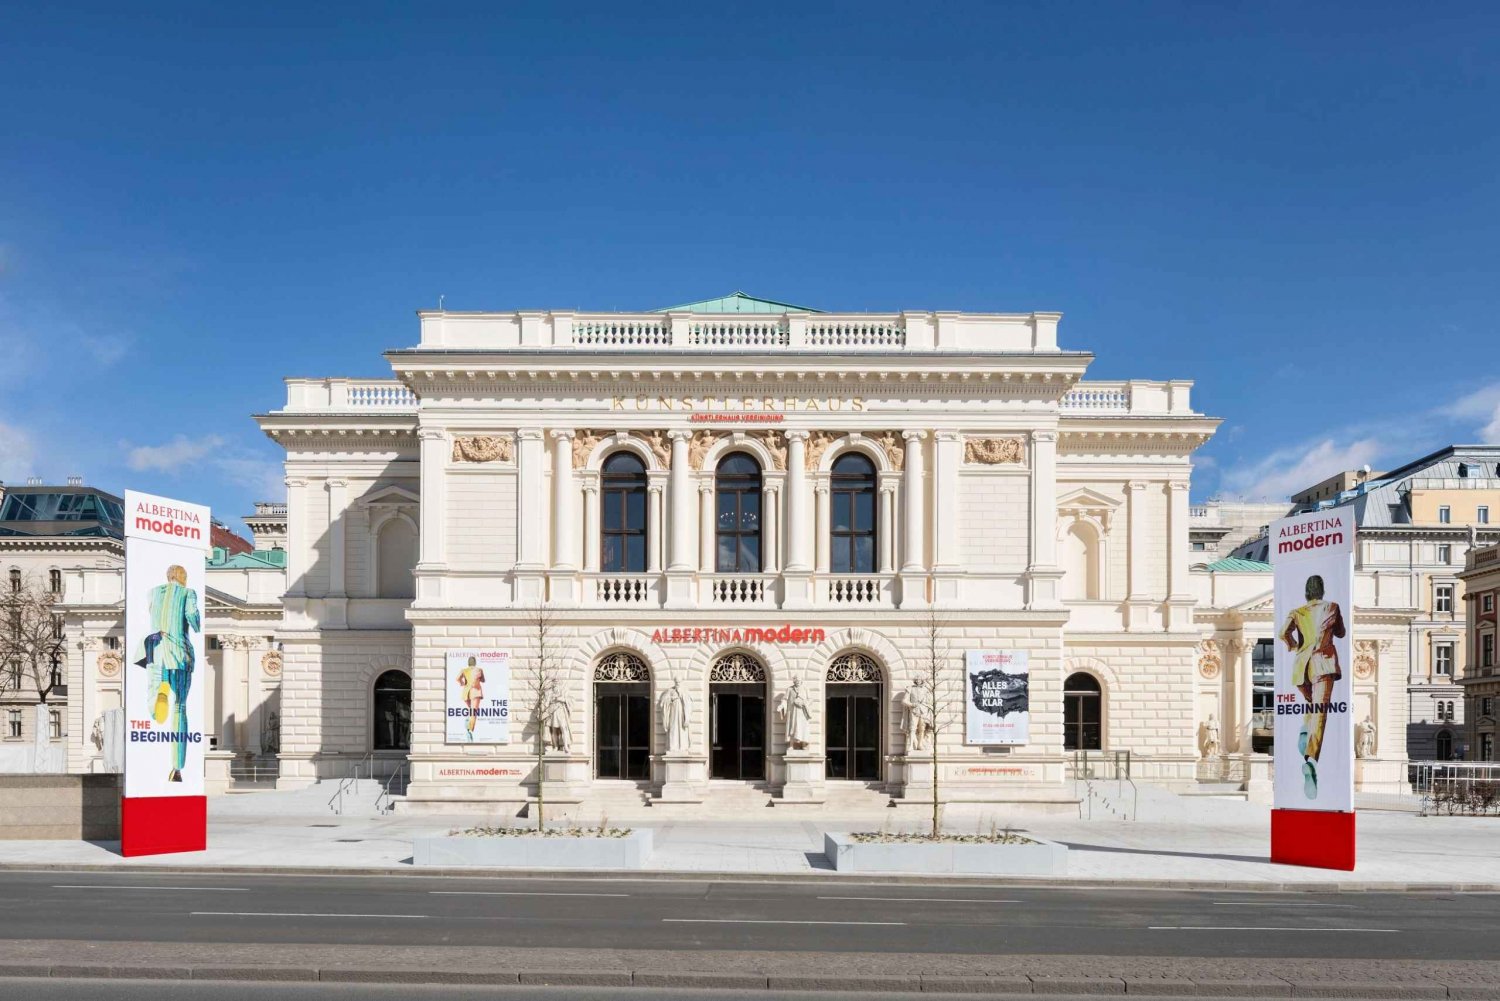 Wien: Albertina Modern på Künstlerhaus Entry Ticket